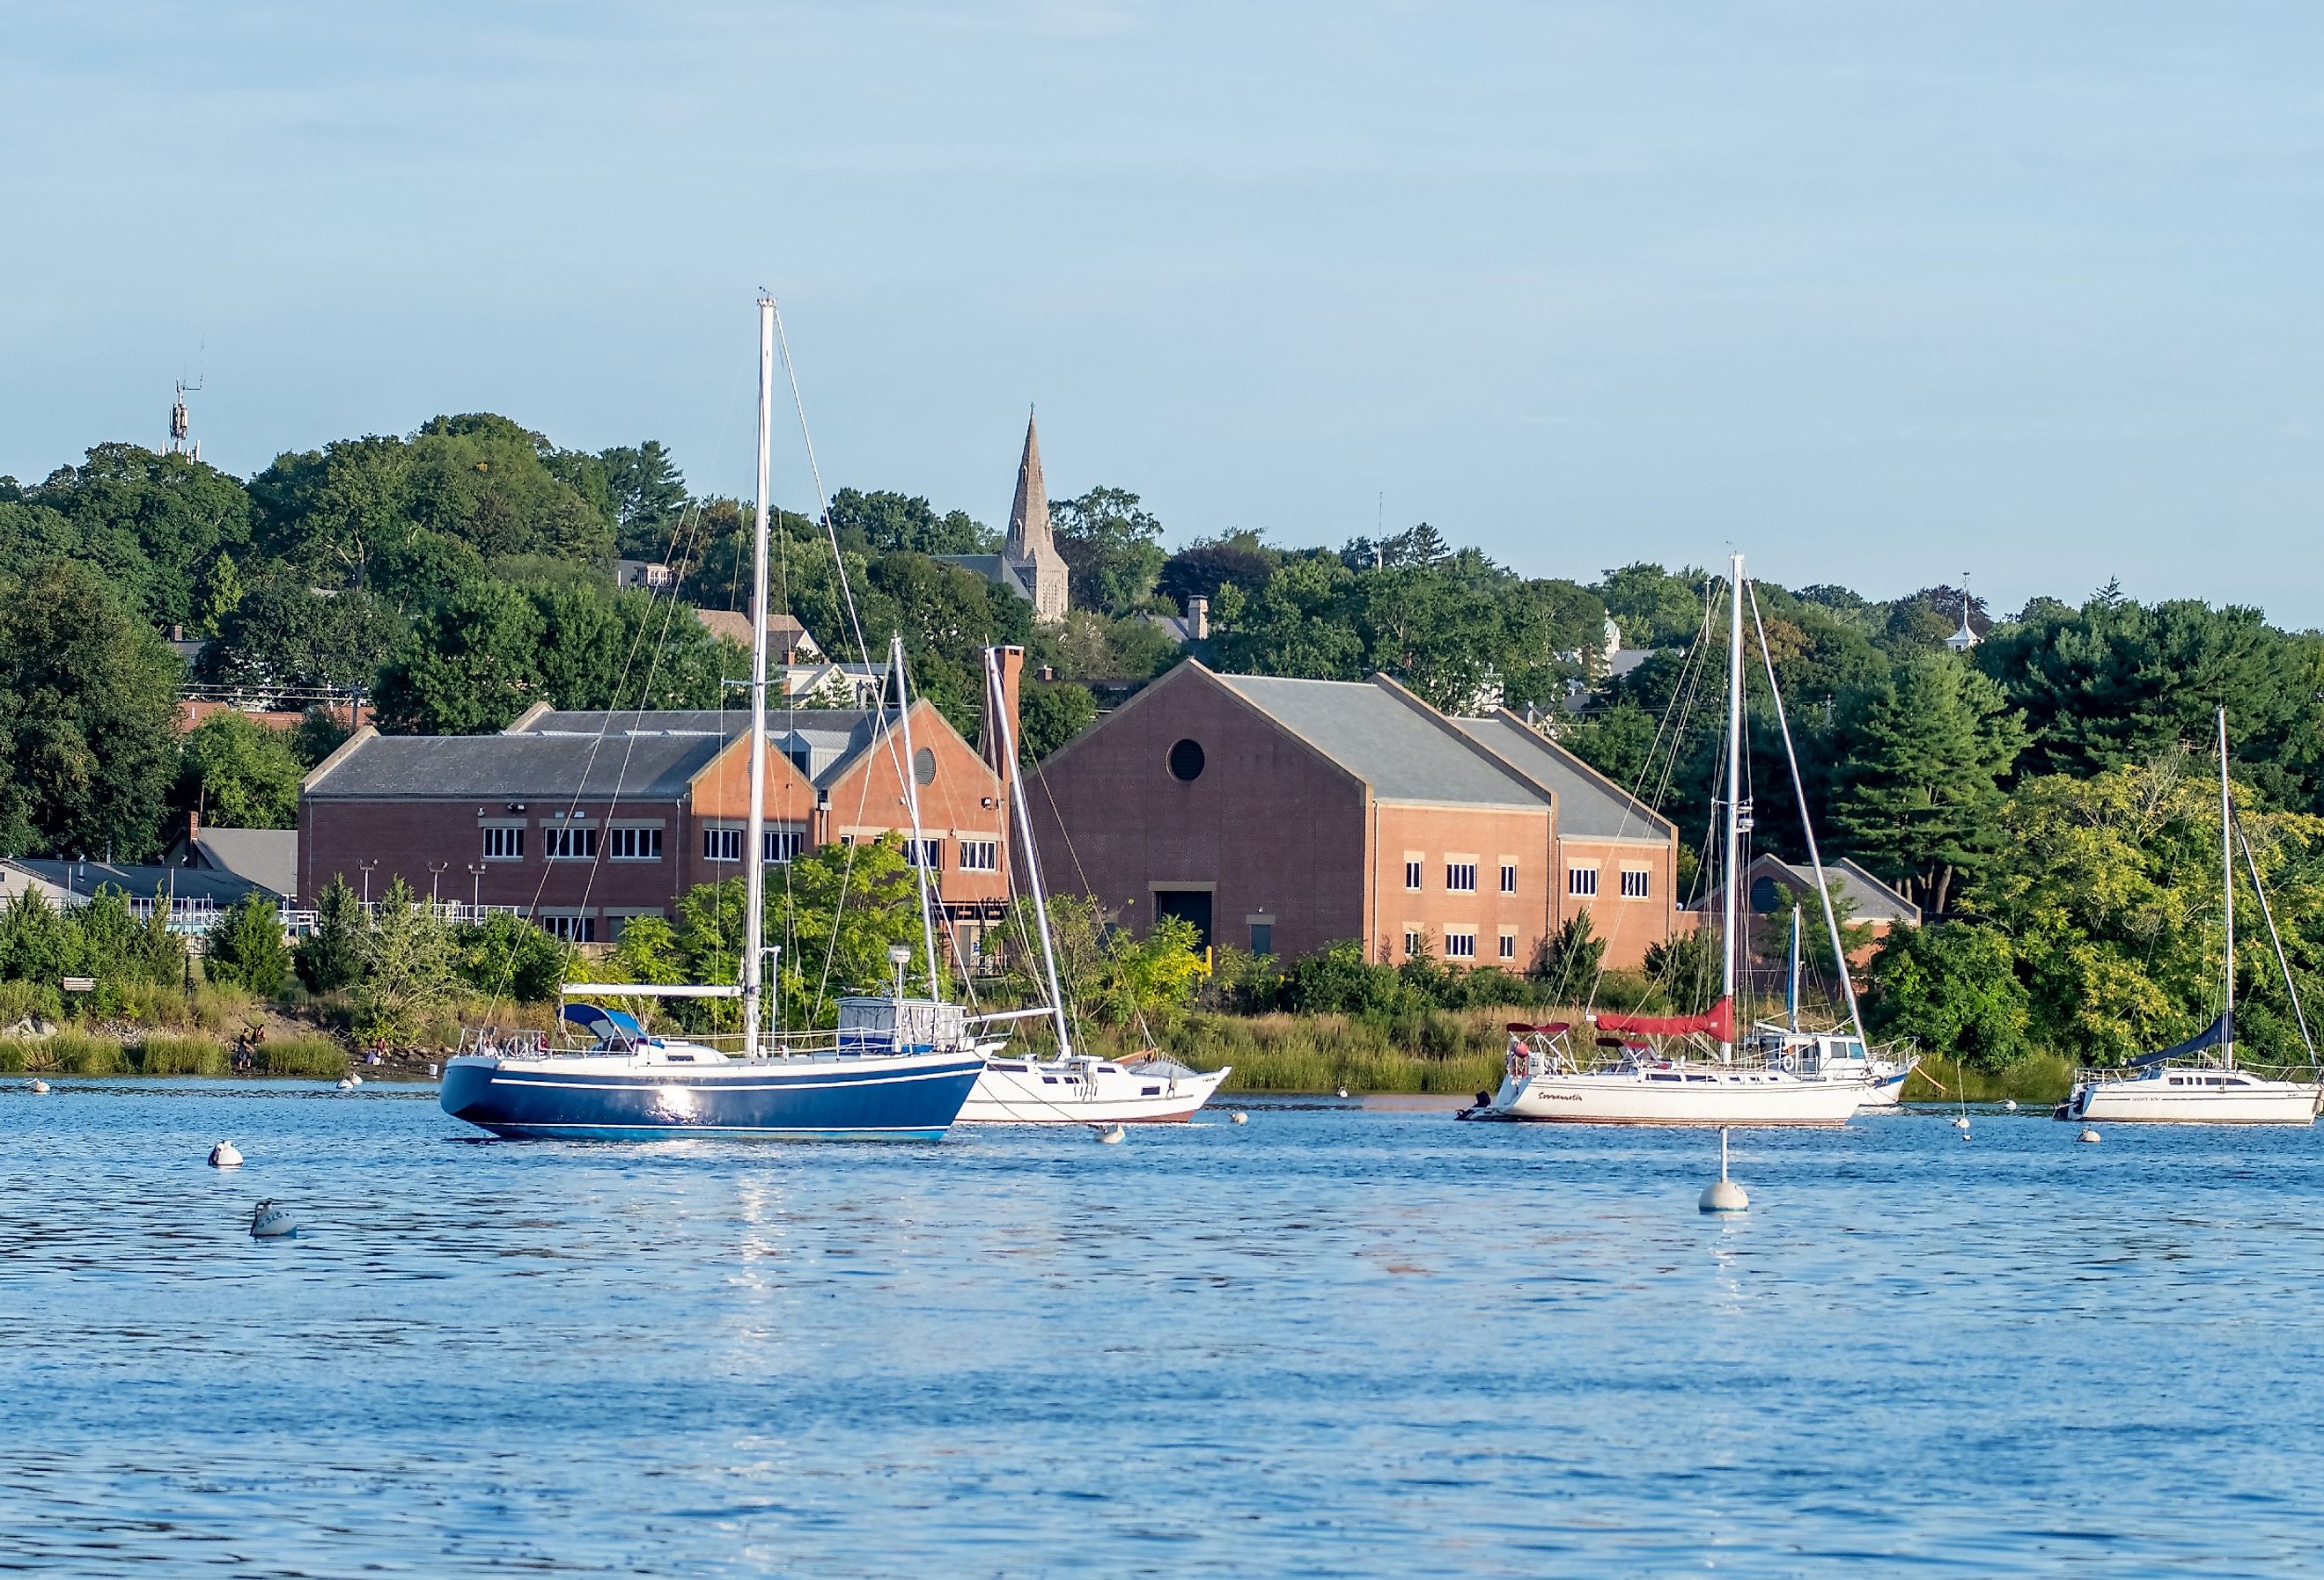 Boats on the water in East Greenwich, Rhode Island.